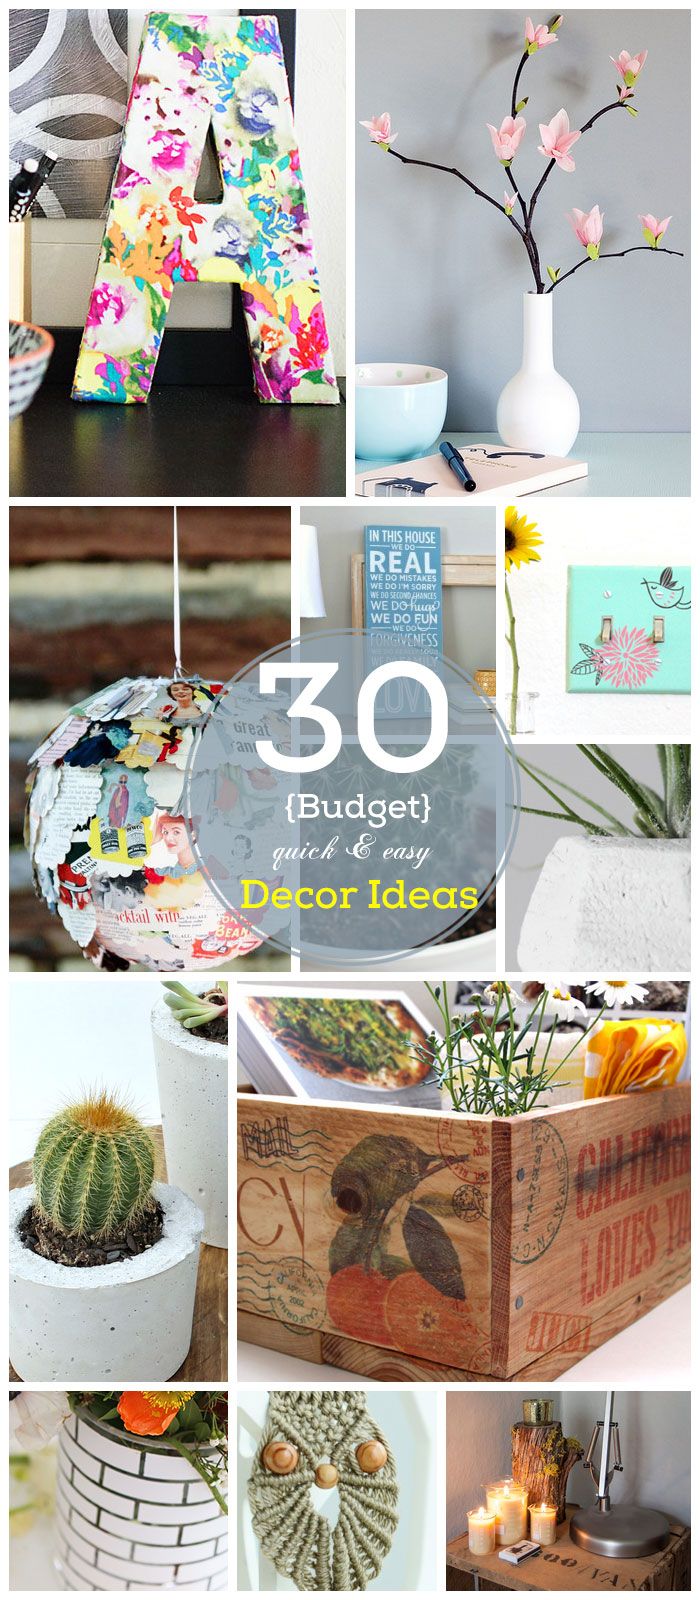 30 DIY Home Decor Ideas on a Budget | Click for Tutorial | Easy and Creative Dec...